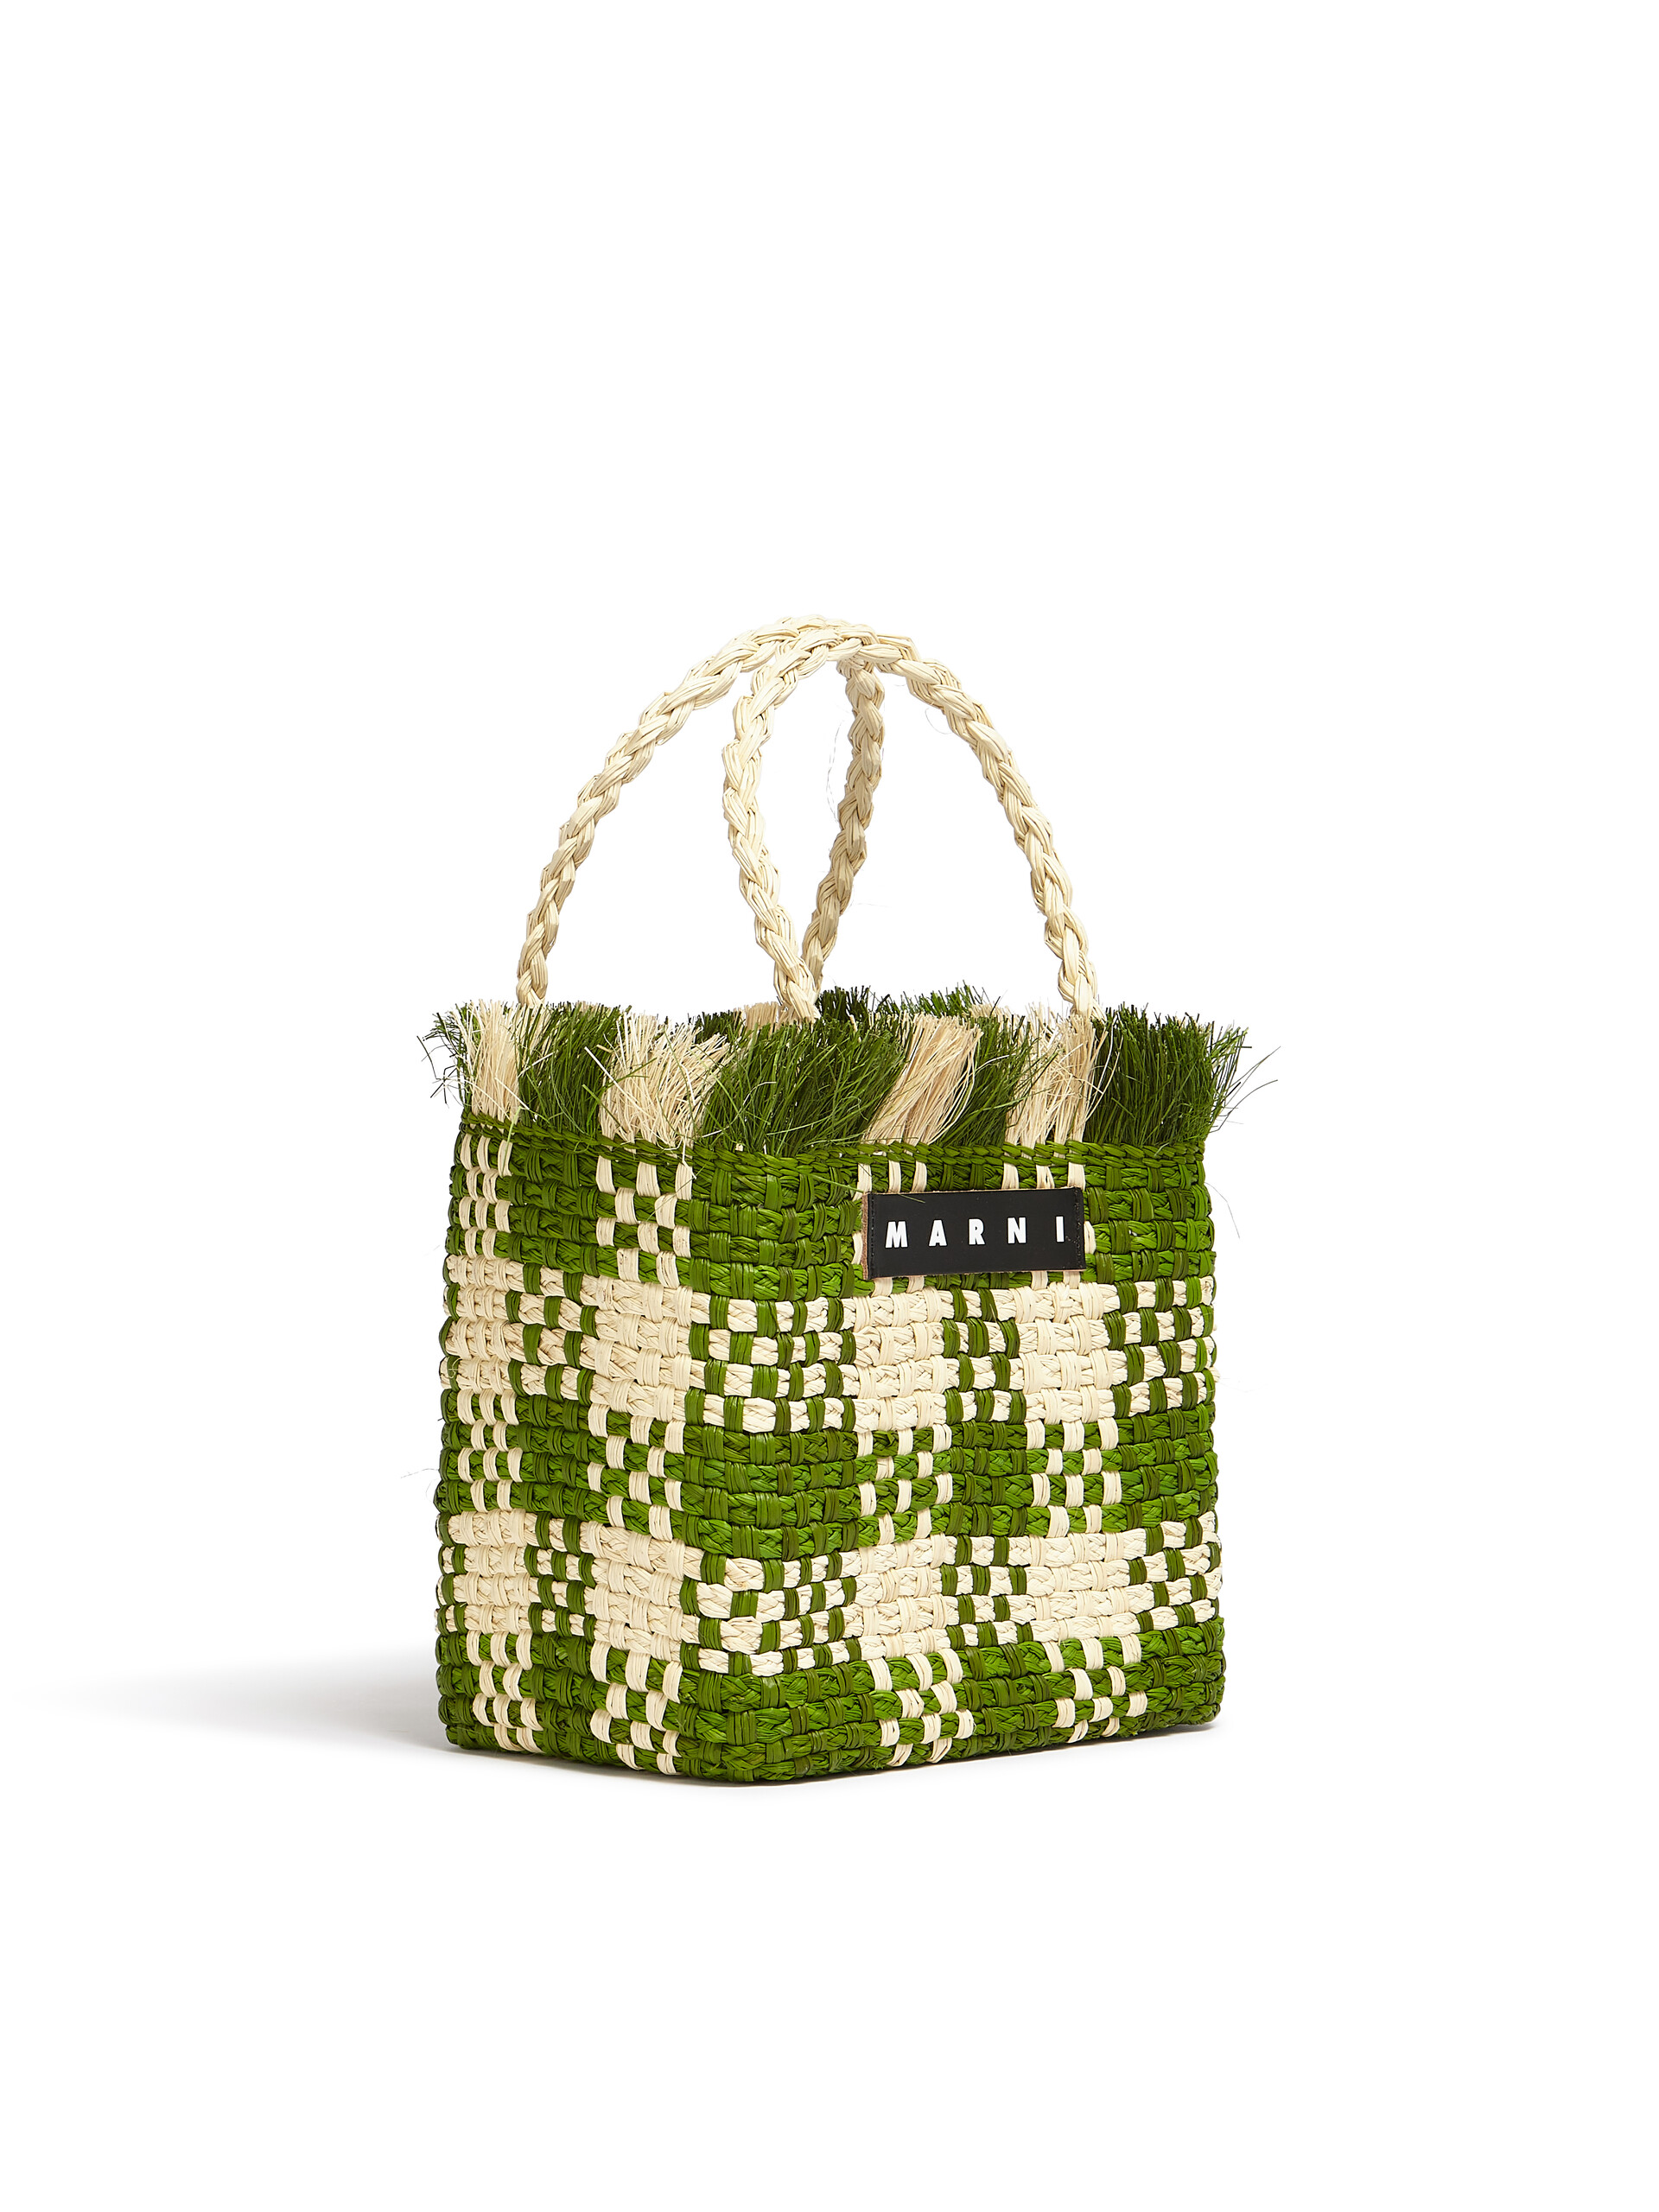 MARNI MARKET small bag in green natural fiber - Bags - Image 2